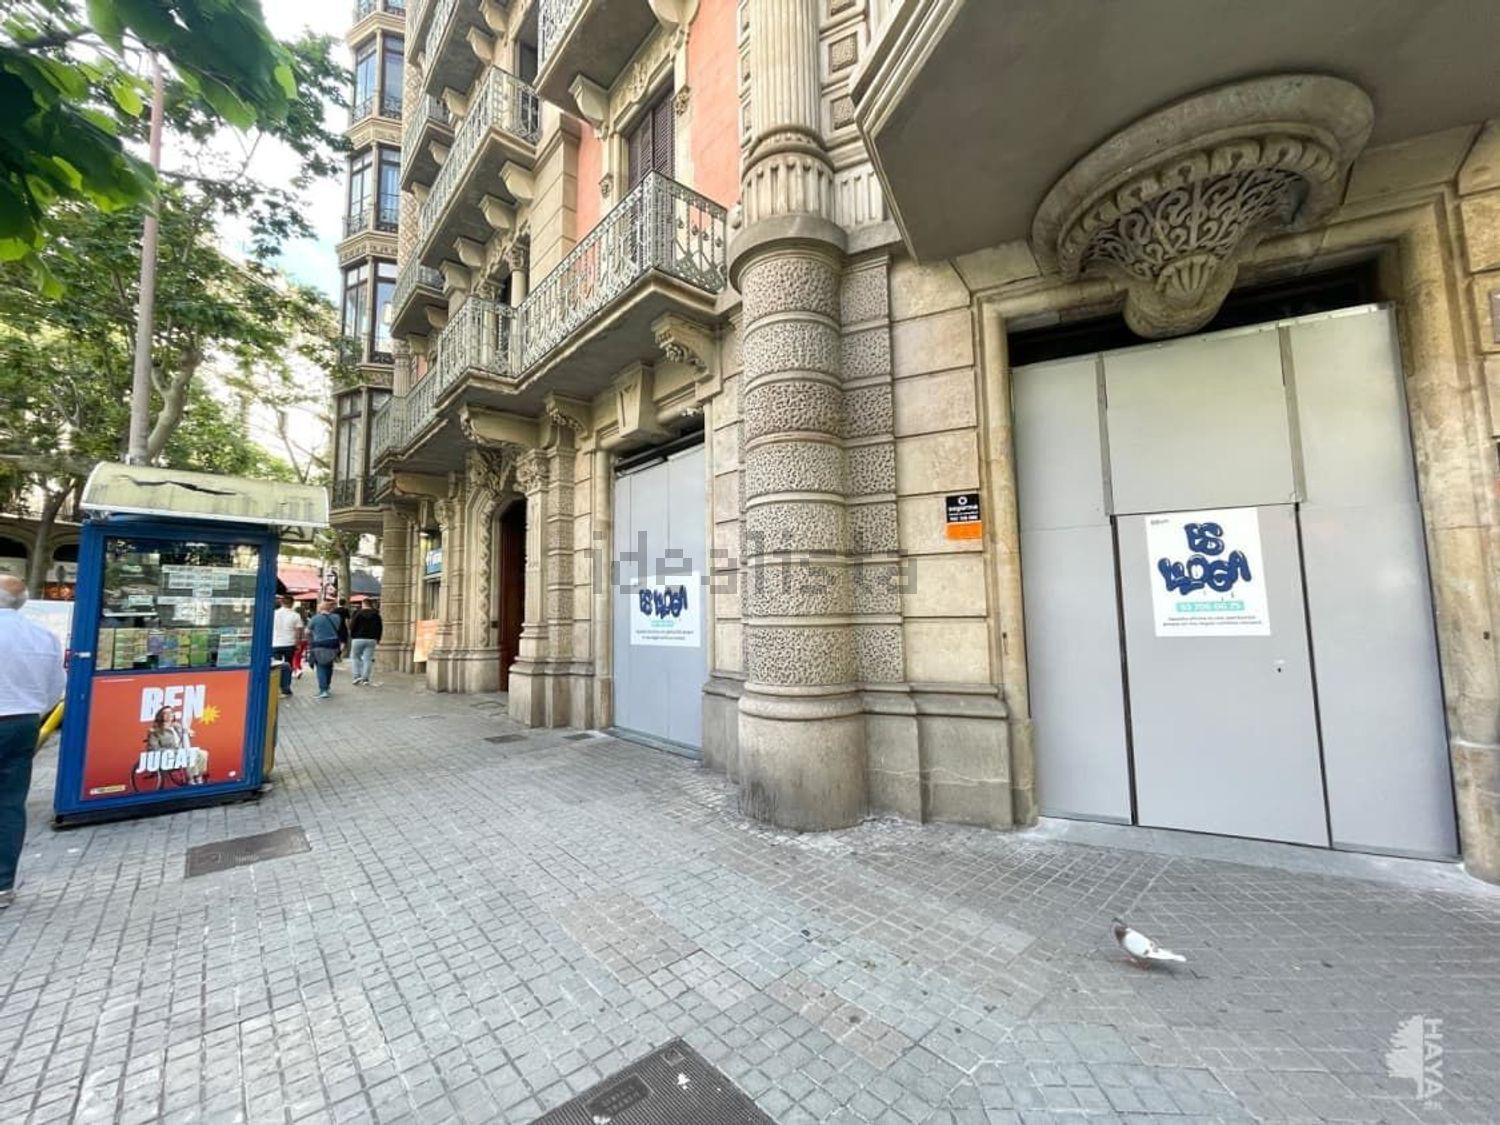 Commercial property for rent in rambla de Catalunya
 
 Local in the city of Barcelona. It is locat